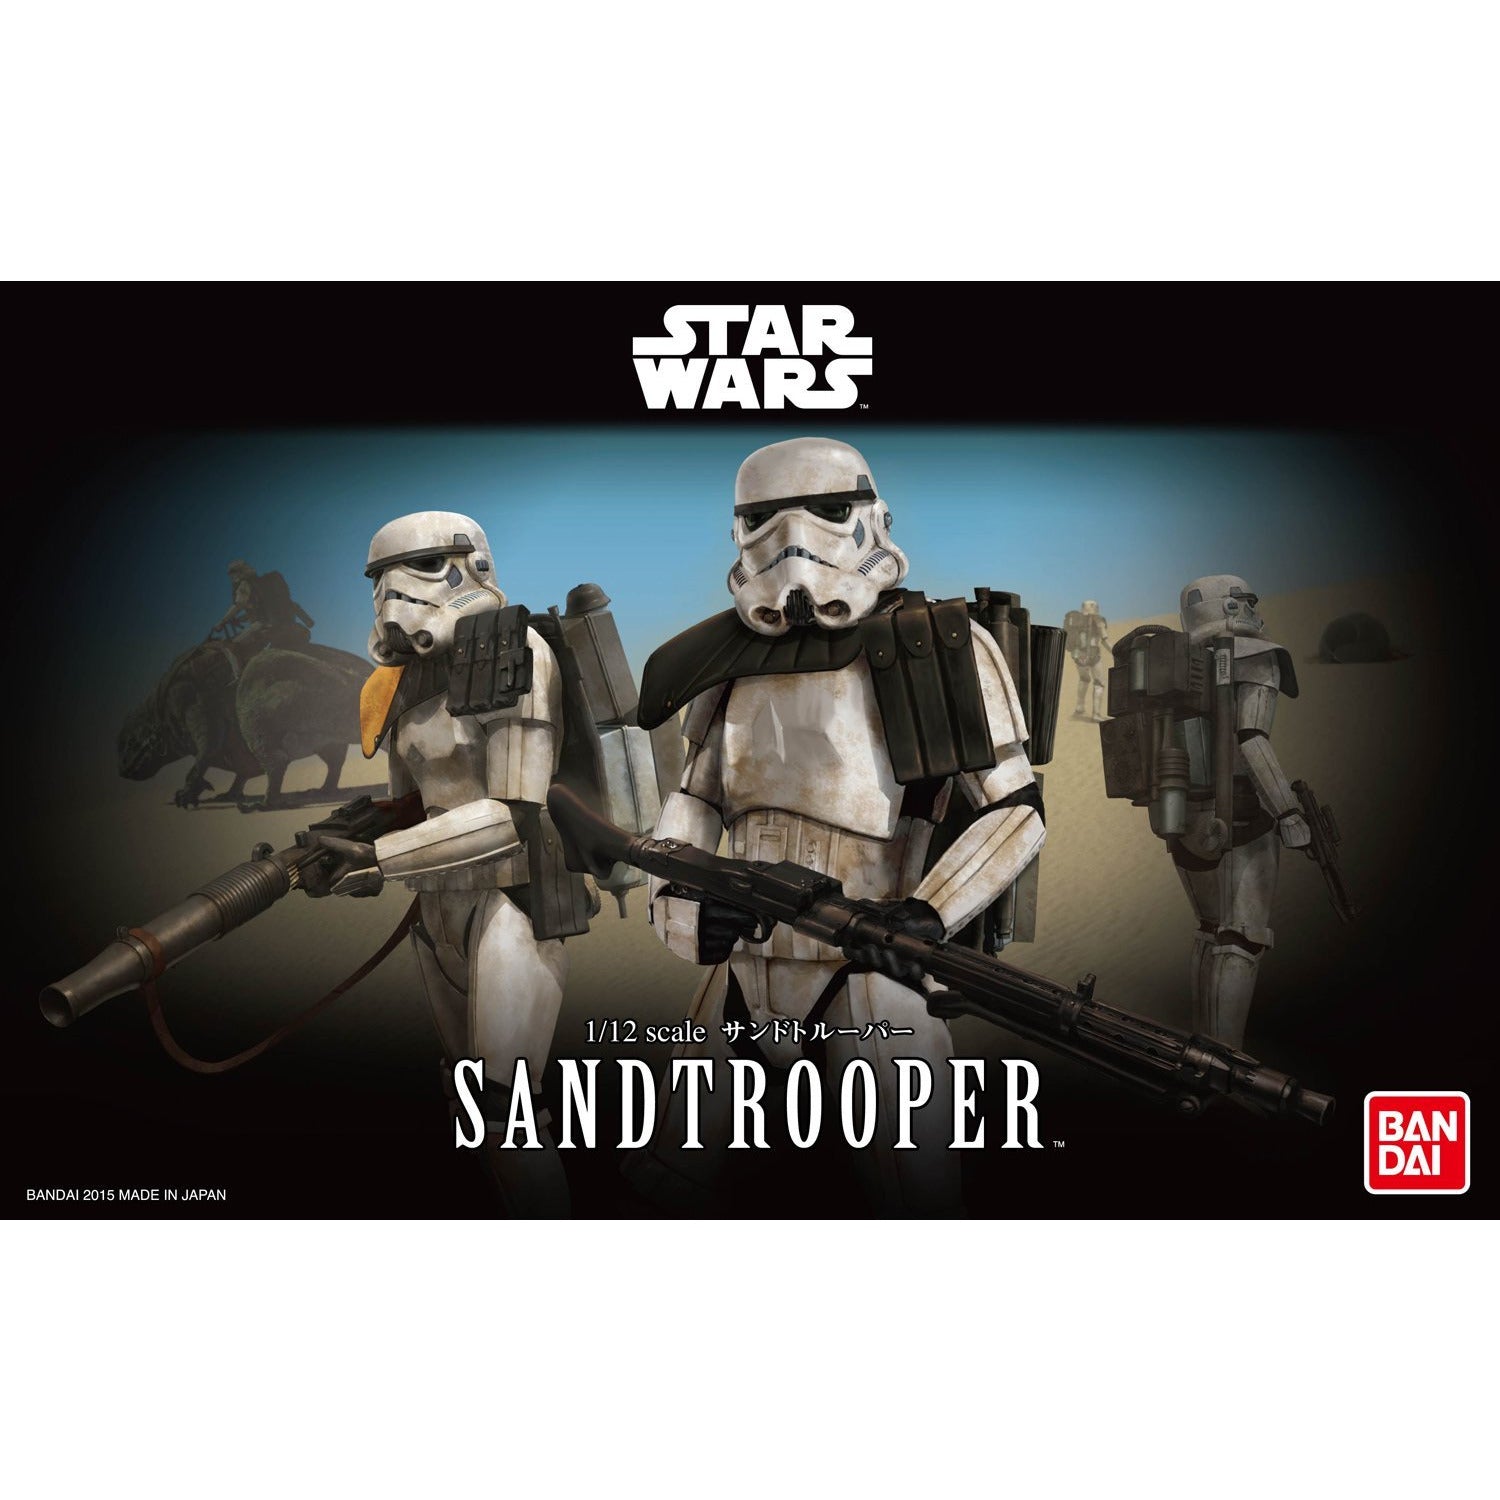 Star Wars Sandtrooper 1/12 #5066148 Action Figure Model Kit by Bandai